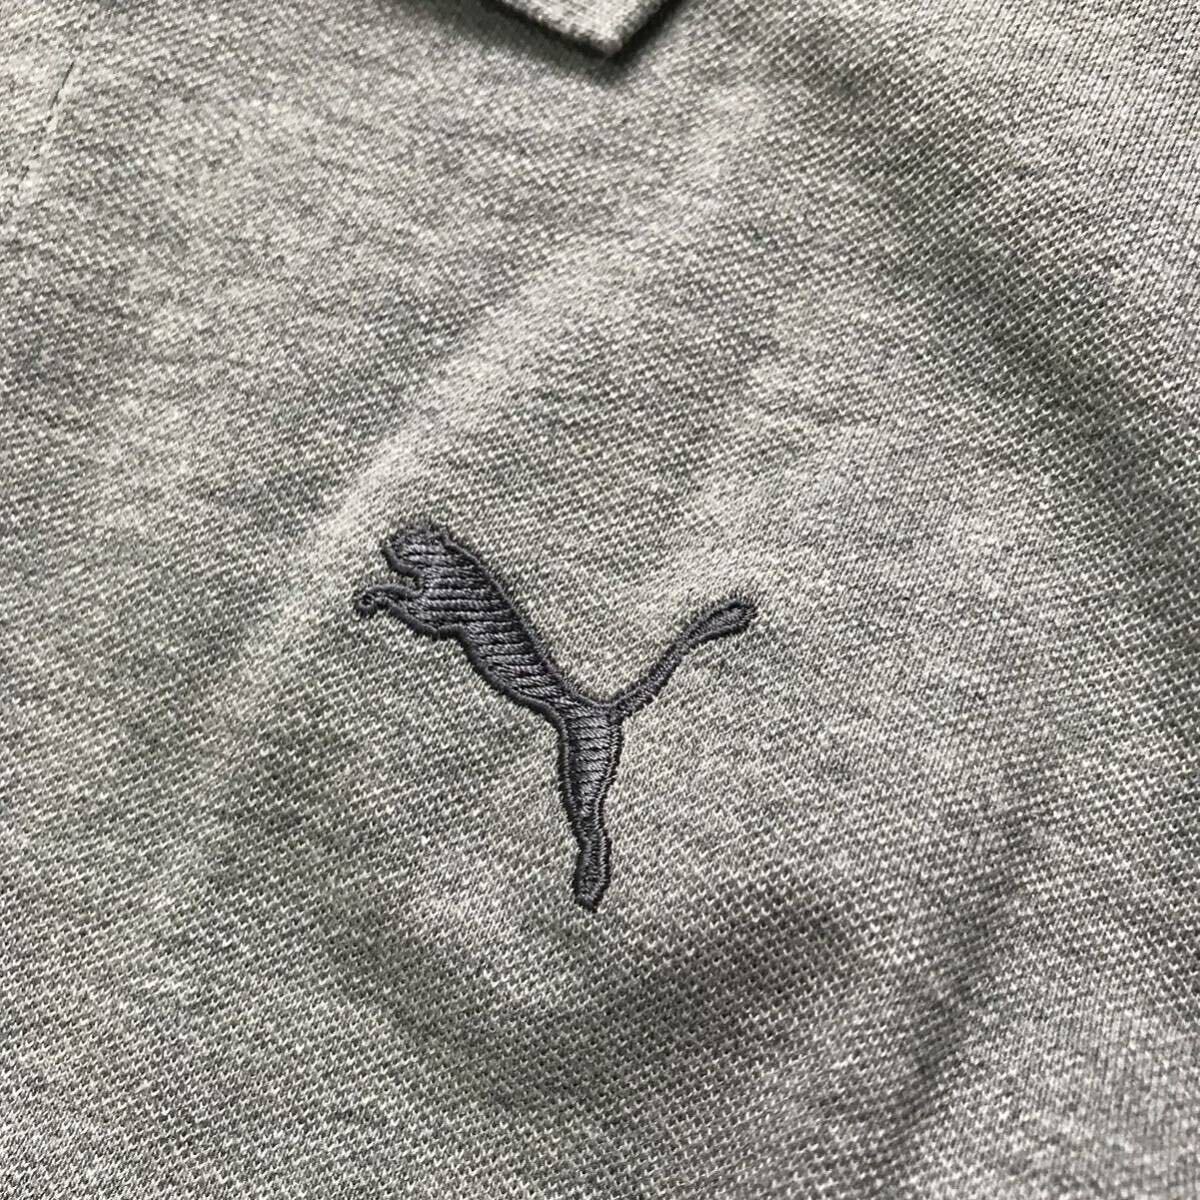 #C038 new goods [ men's XXL] Puma Golf PUMApike polo-shirt short sleeves Golf gray tag attaching 